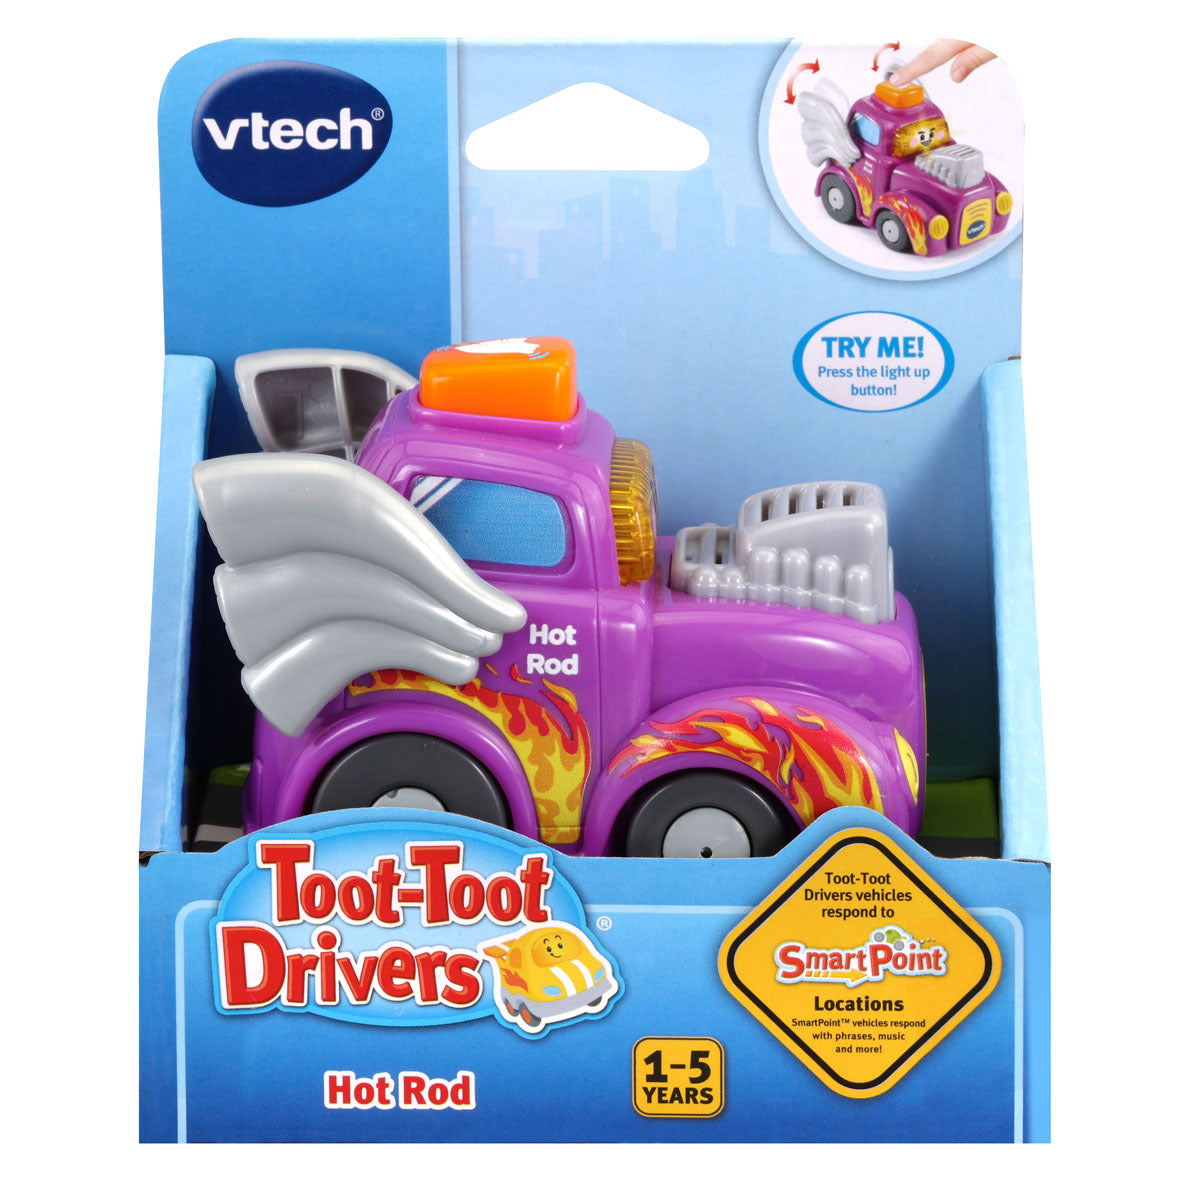 Vtech Toot-Toot Drivers - Hot Rod